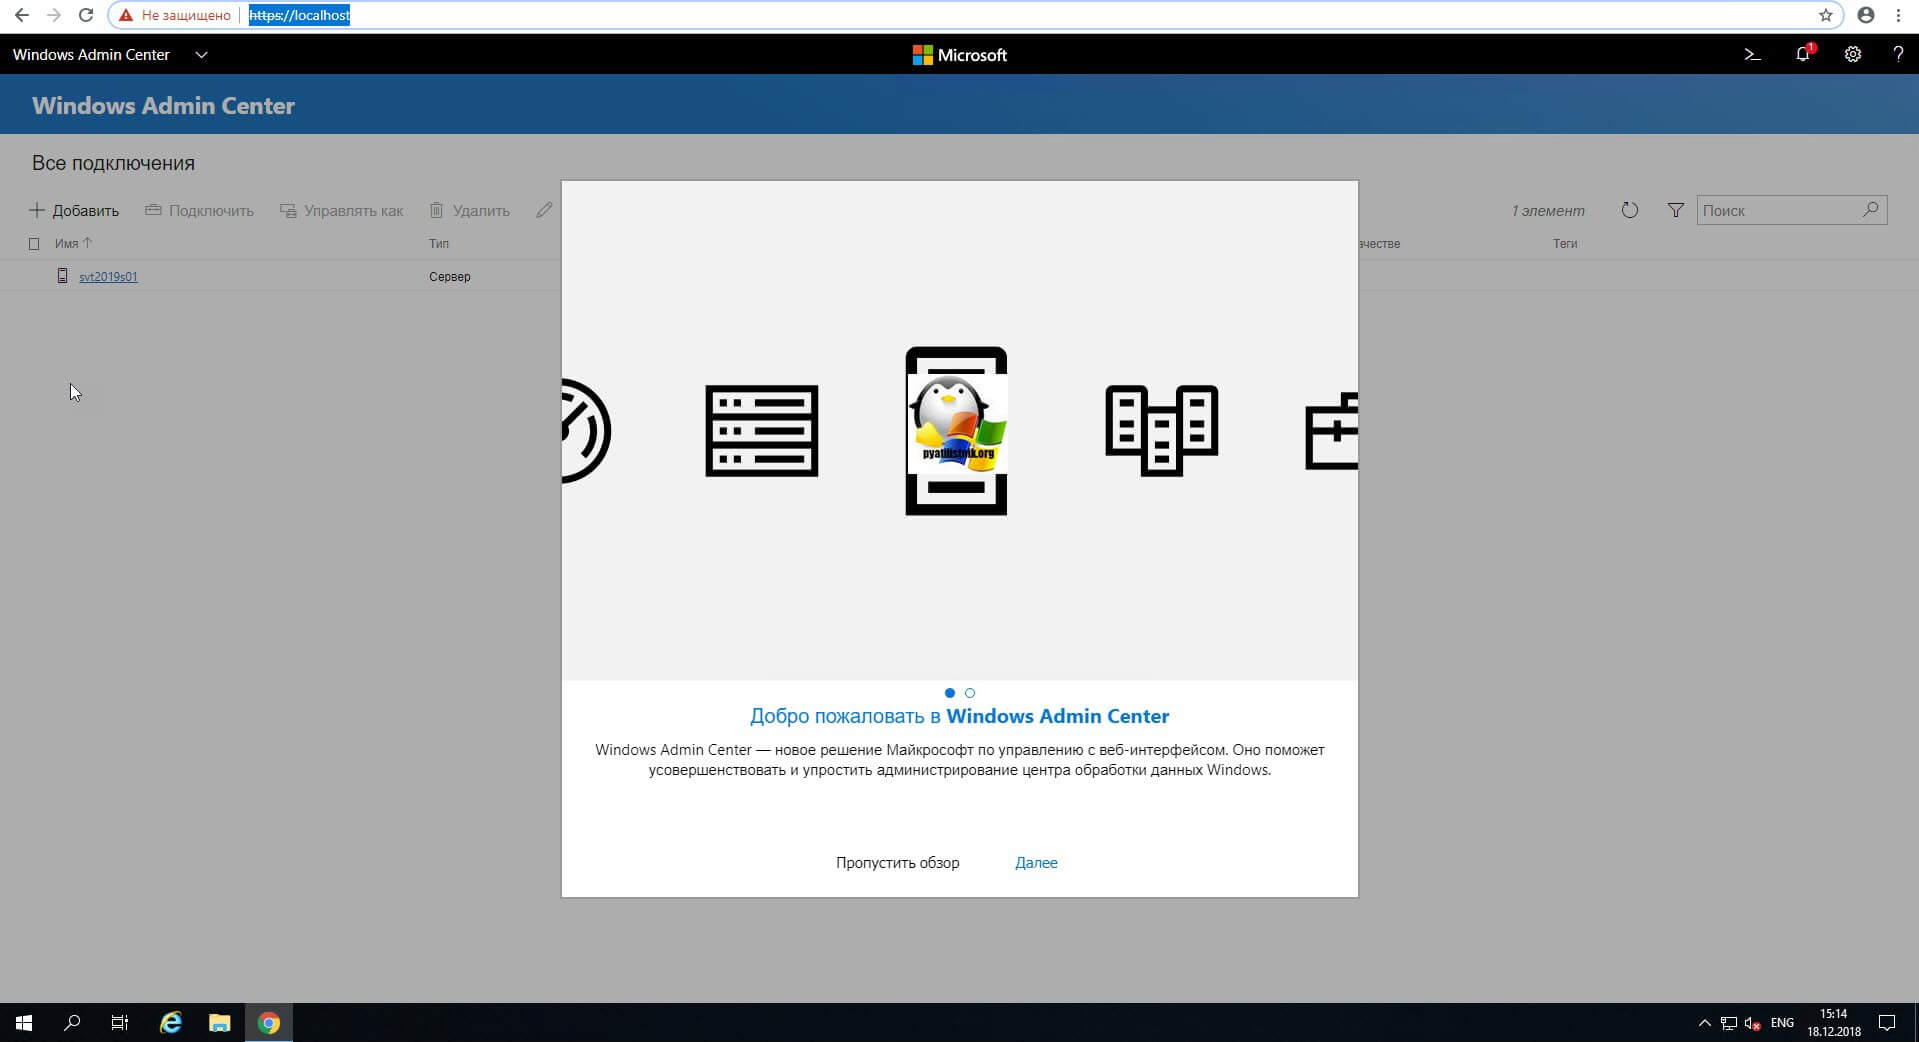 Экран приветствия Windows Admin Center